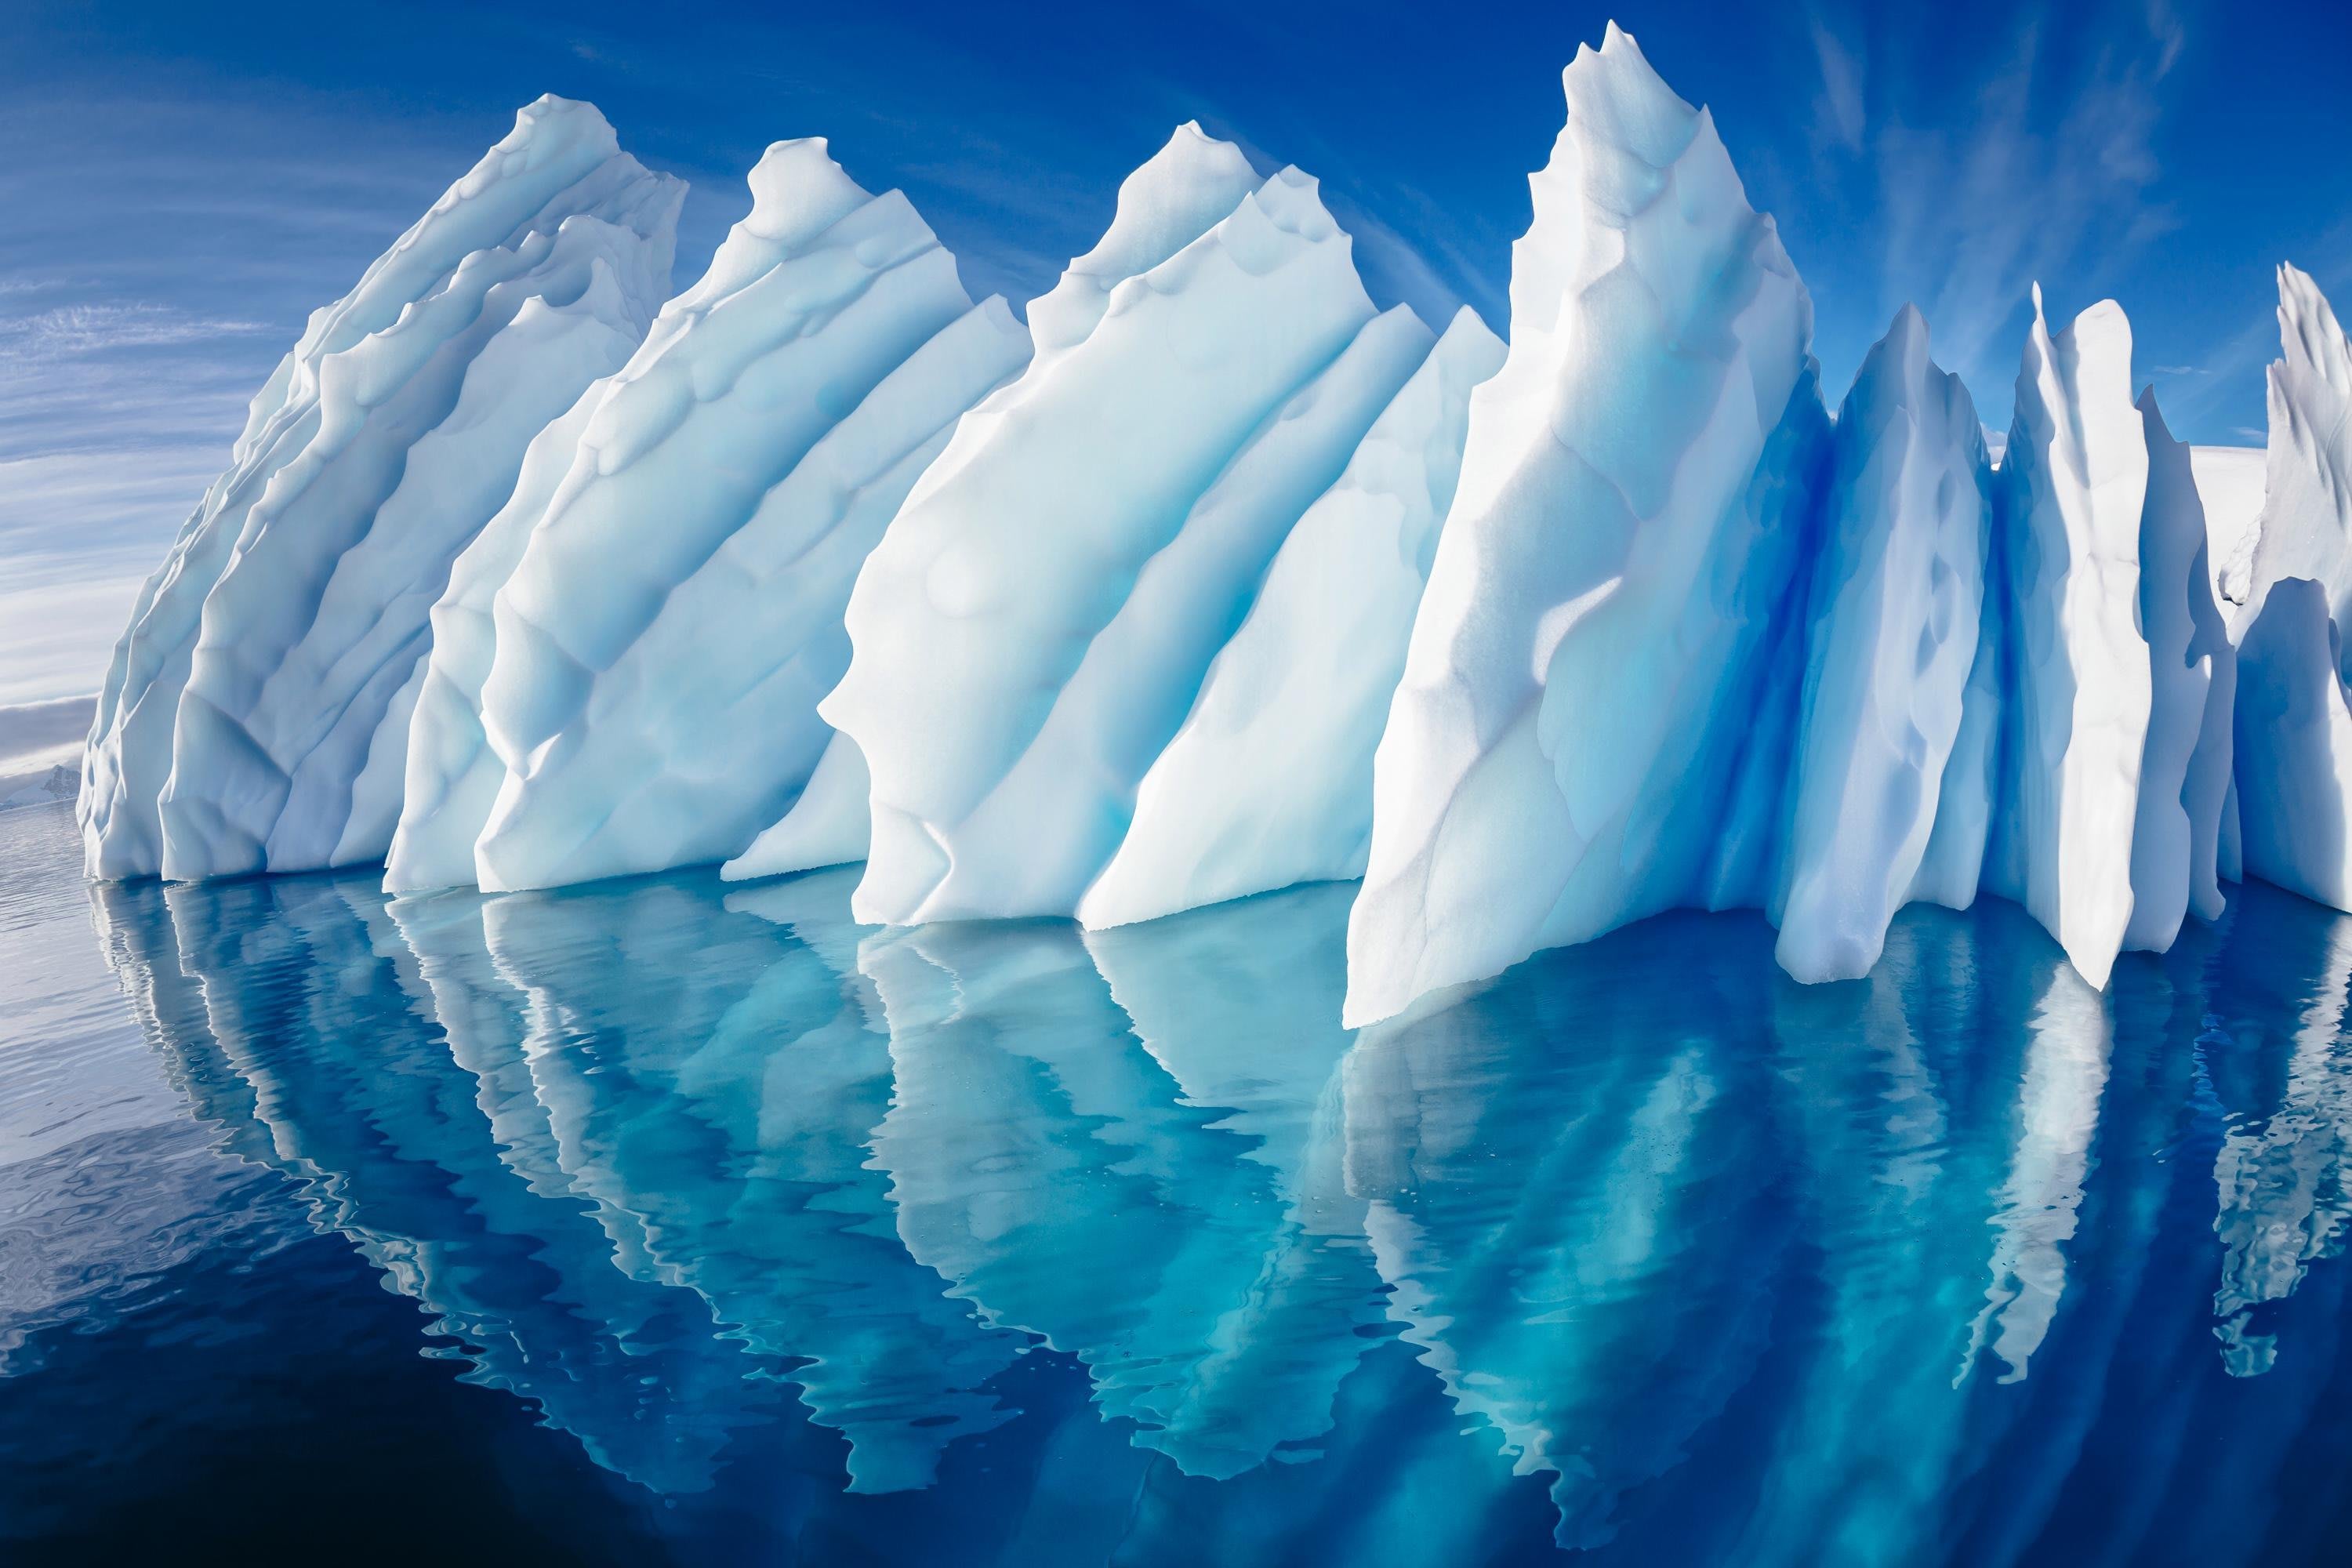 Глыба льда на воде. Ледники айсберги Антарктиды. Лед Айсберг Арктика Антарктида. Гавань Парадайз в Антарктиде. Гидросфера Айсберг.